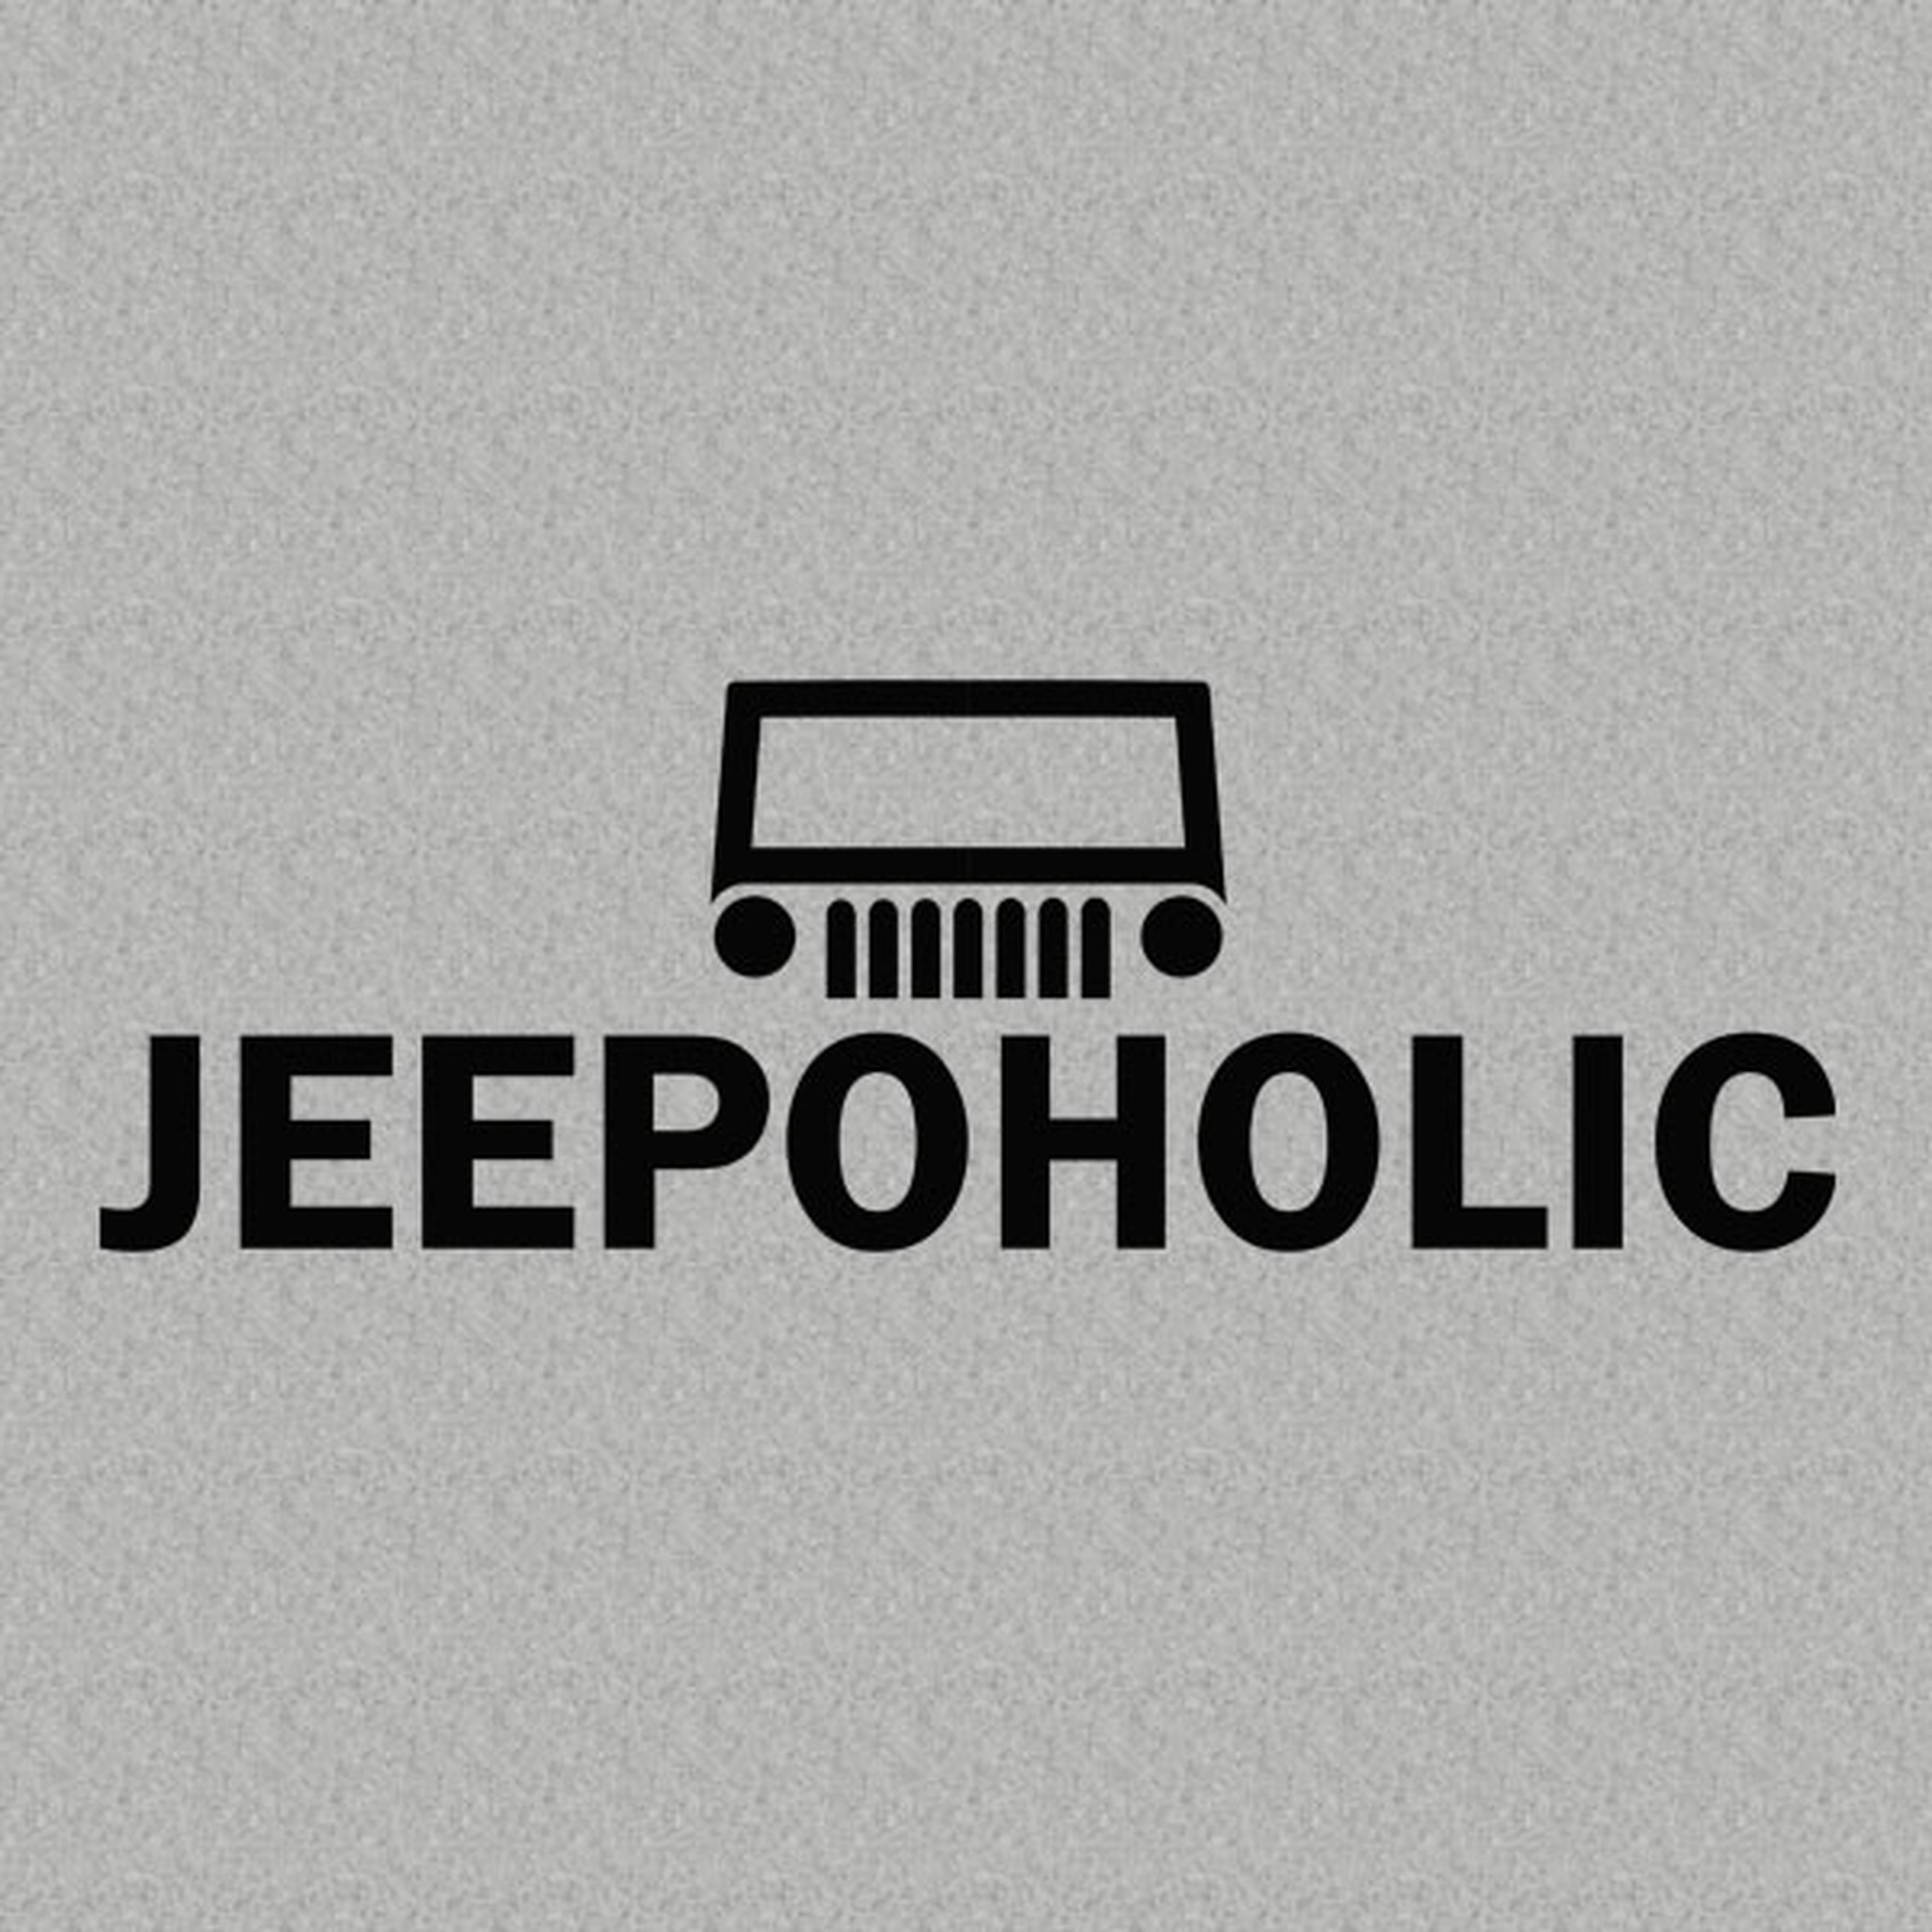 Jeepoholic - T-shirt